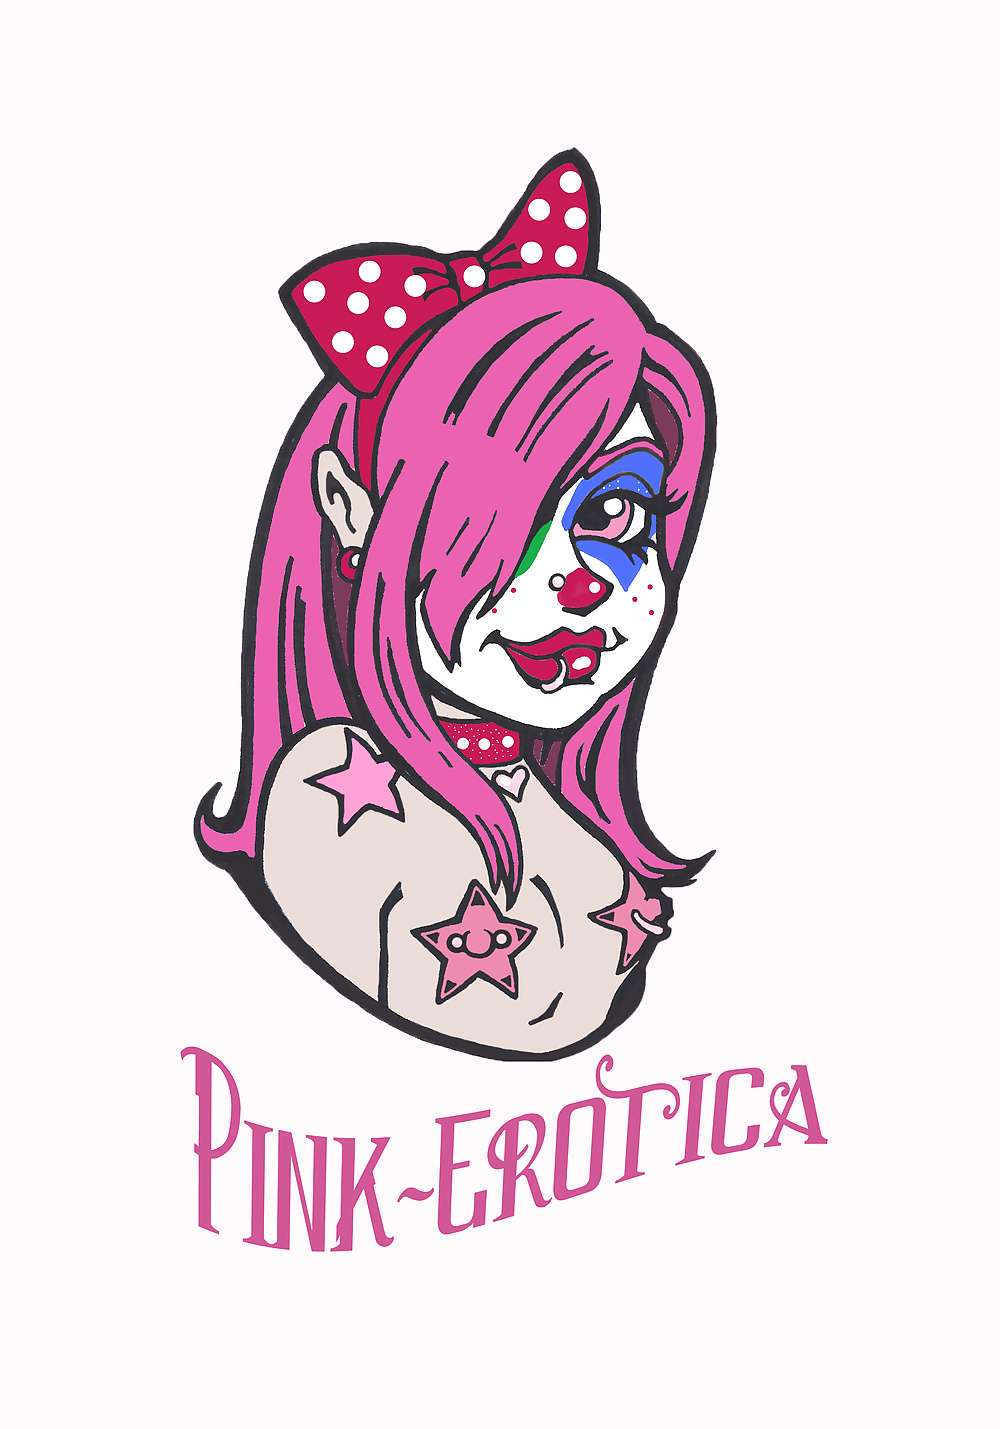 Pink-Erotica Sissyboy Cross Dresser Adorably Pink #28119706